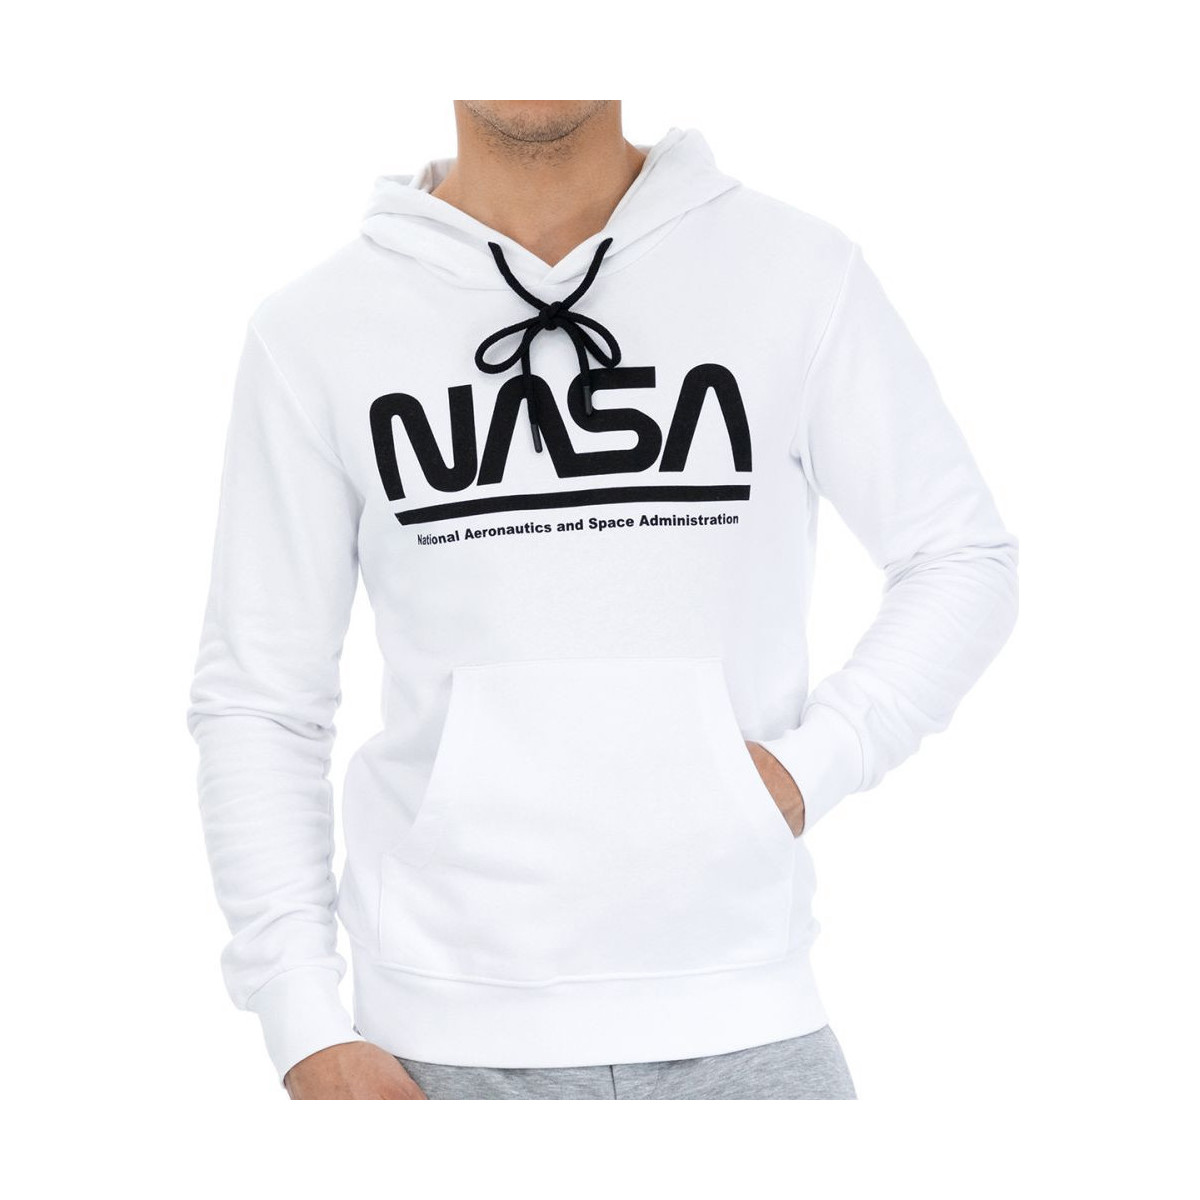 Kleidung Herren Sweatshirts Nasa -NASA05H Weiss